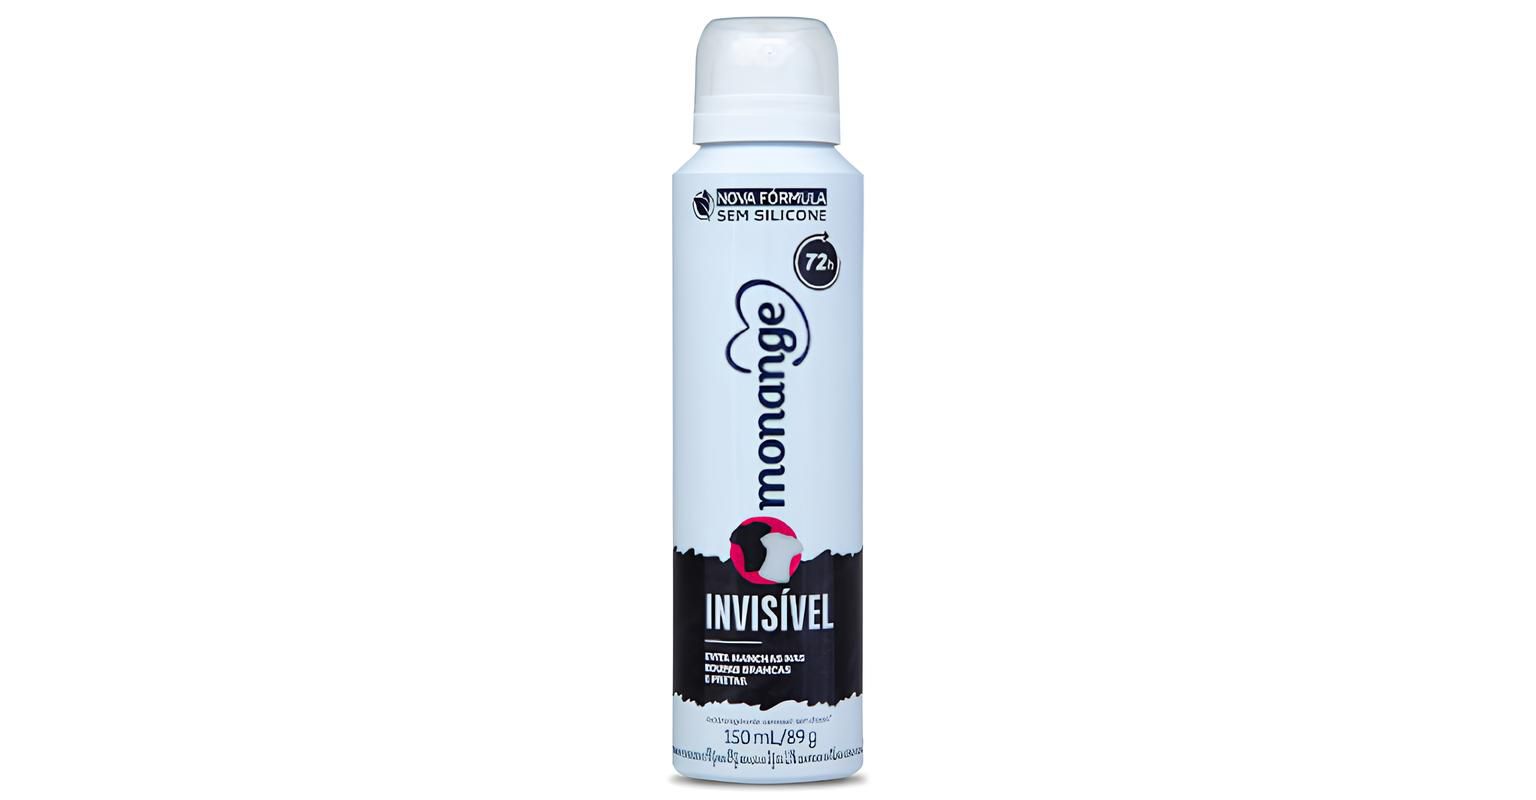 Embalagem do desodorante aerossol Monange Invisvel.